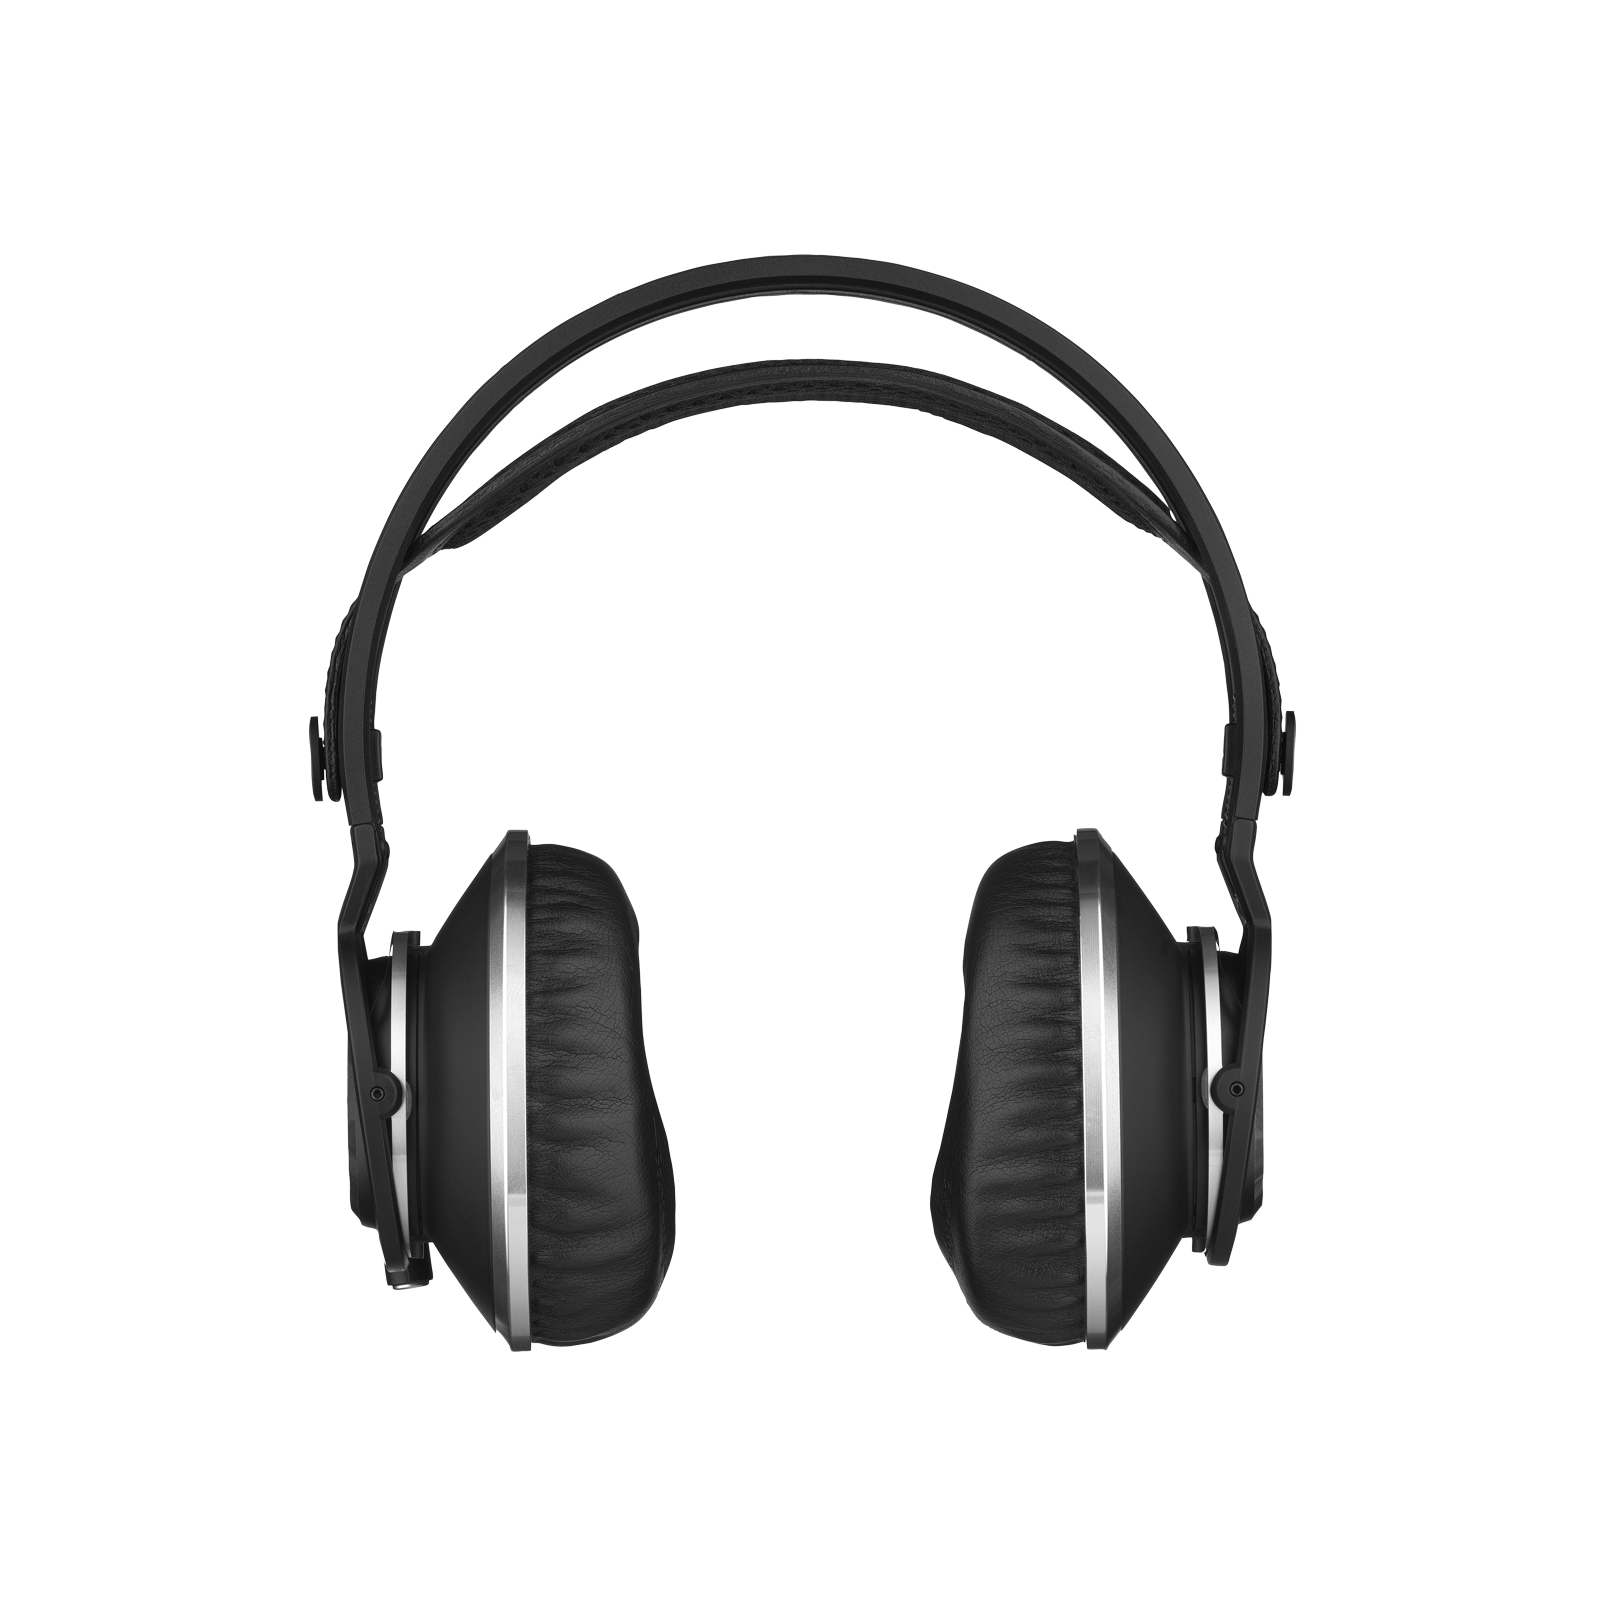 K872 - Black - Master reference closed-back headphones - Front